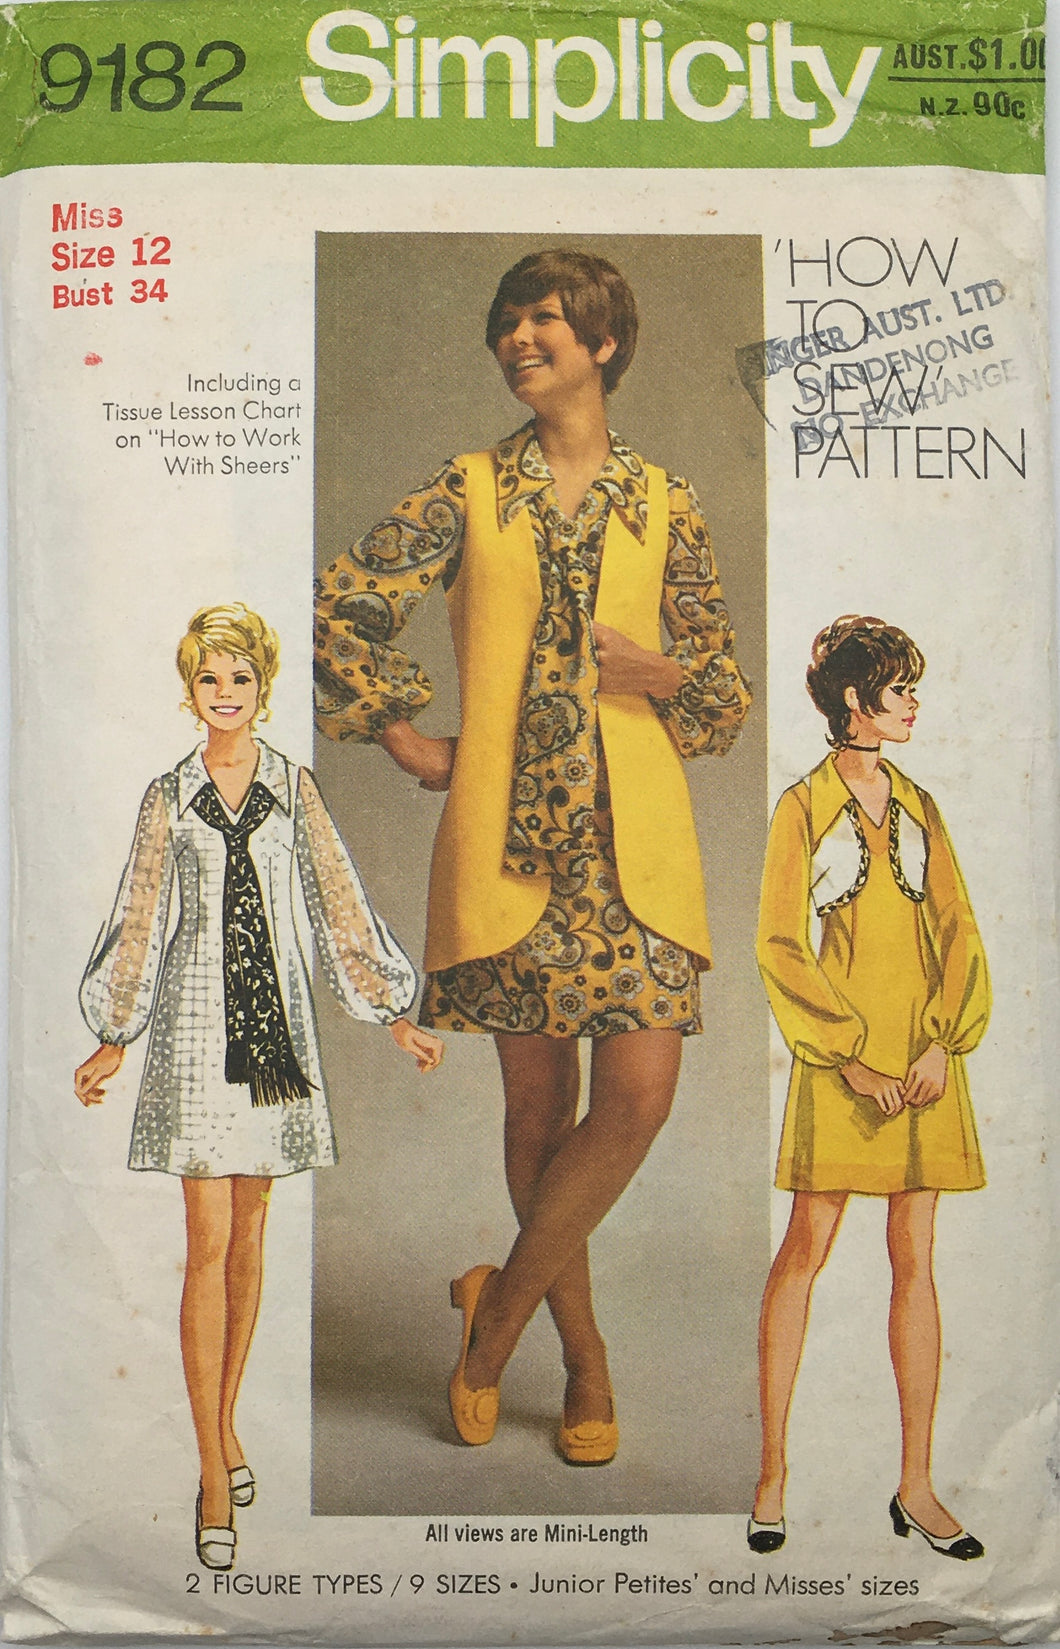 1971 Vintage Sewing Pattern: Simplicity 9182